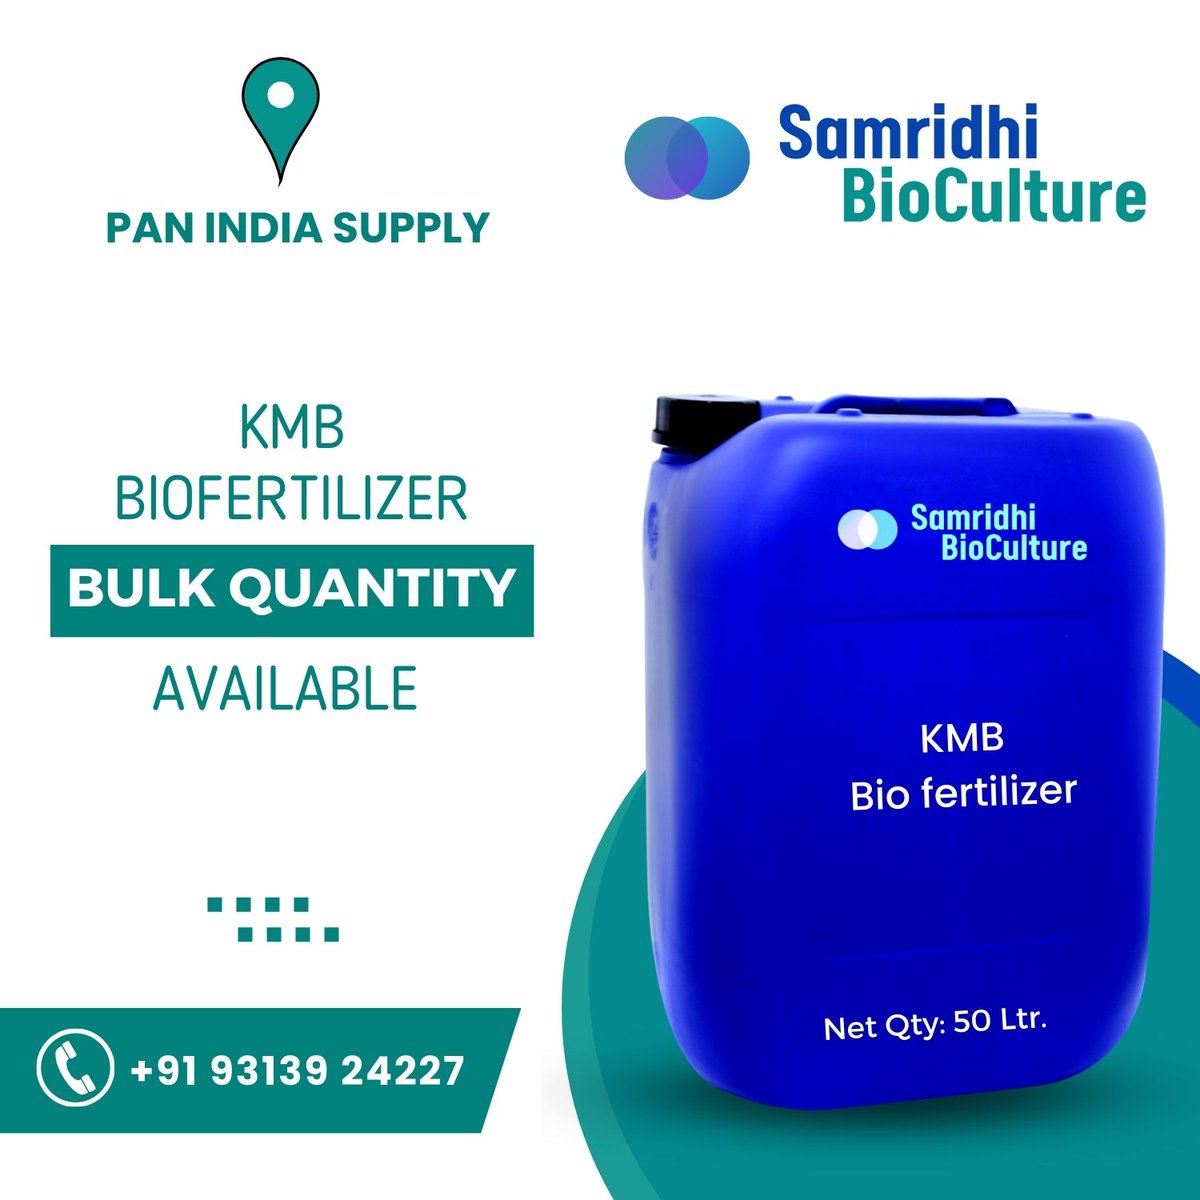 KMB Bio Fertilizer Liquid Formulation
.
To place the order online, please visit us at:
samridhibio.com/product/kmb-bi…
Mobile Number: +91 9313924227
.
#agriculturetechnology #bulkfertilizer 
#greenfertilizer